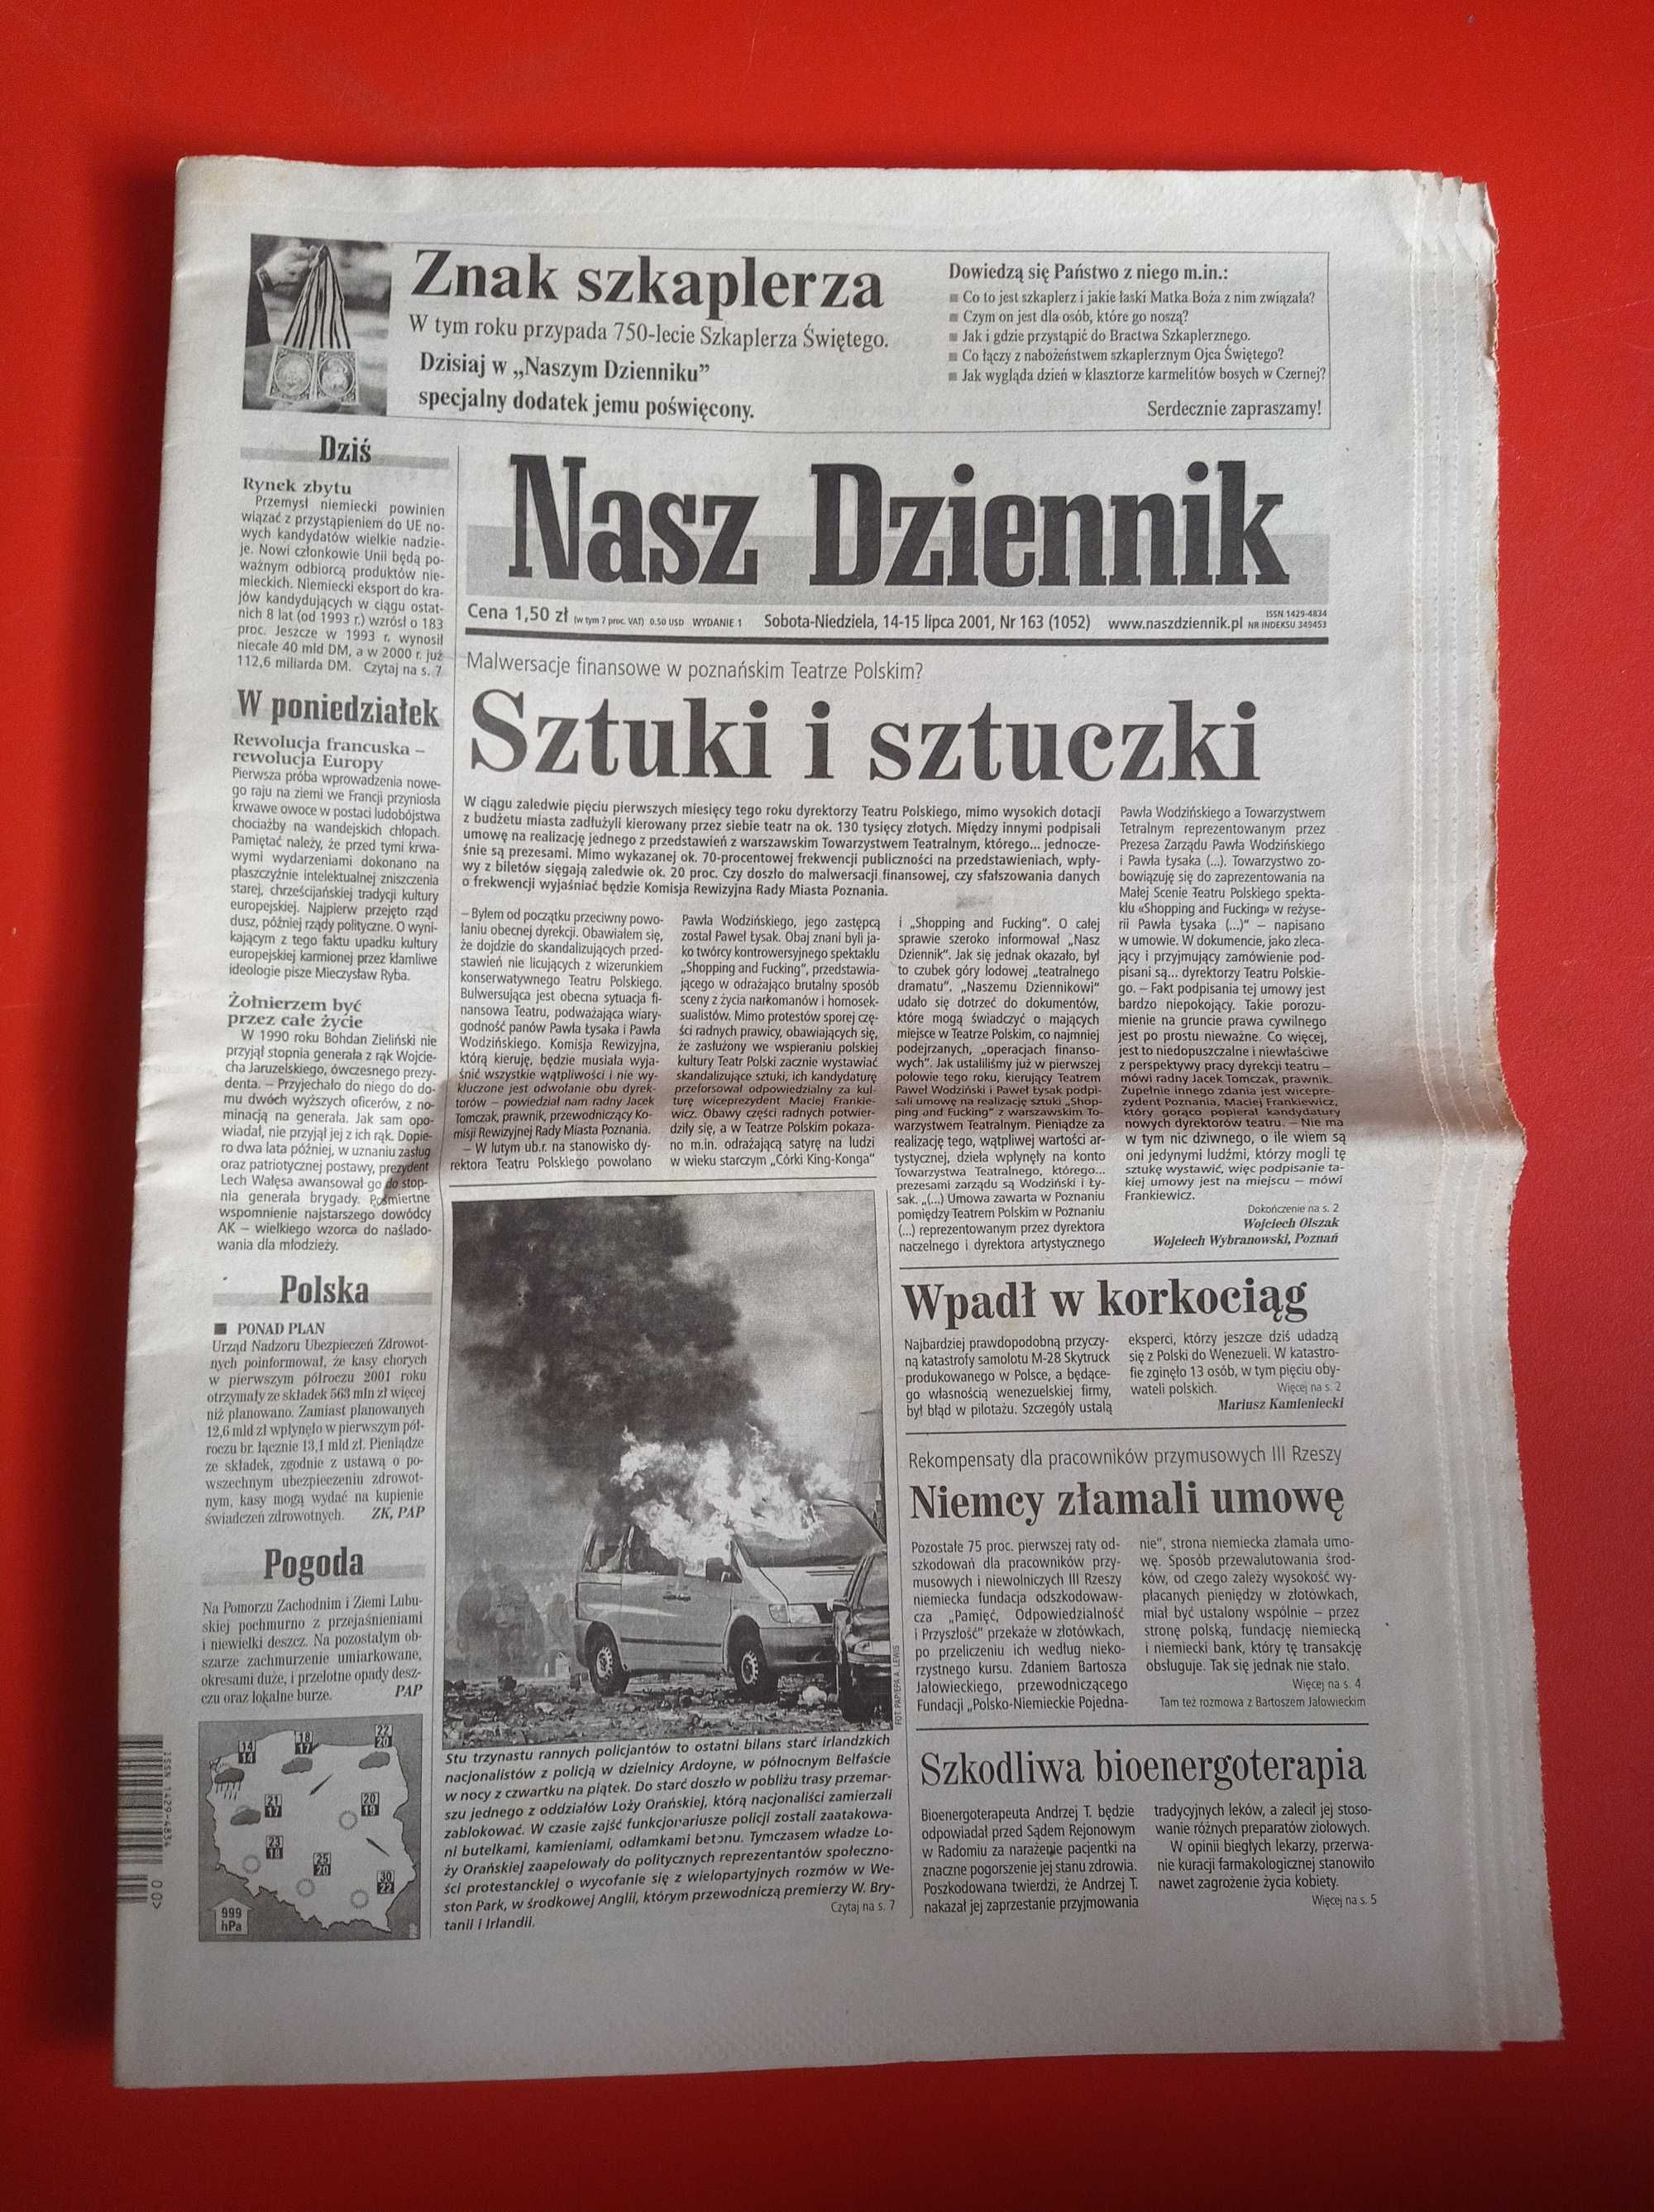 Nasz Dziennik, nr 163/2001, 14-15 lipca 2001